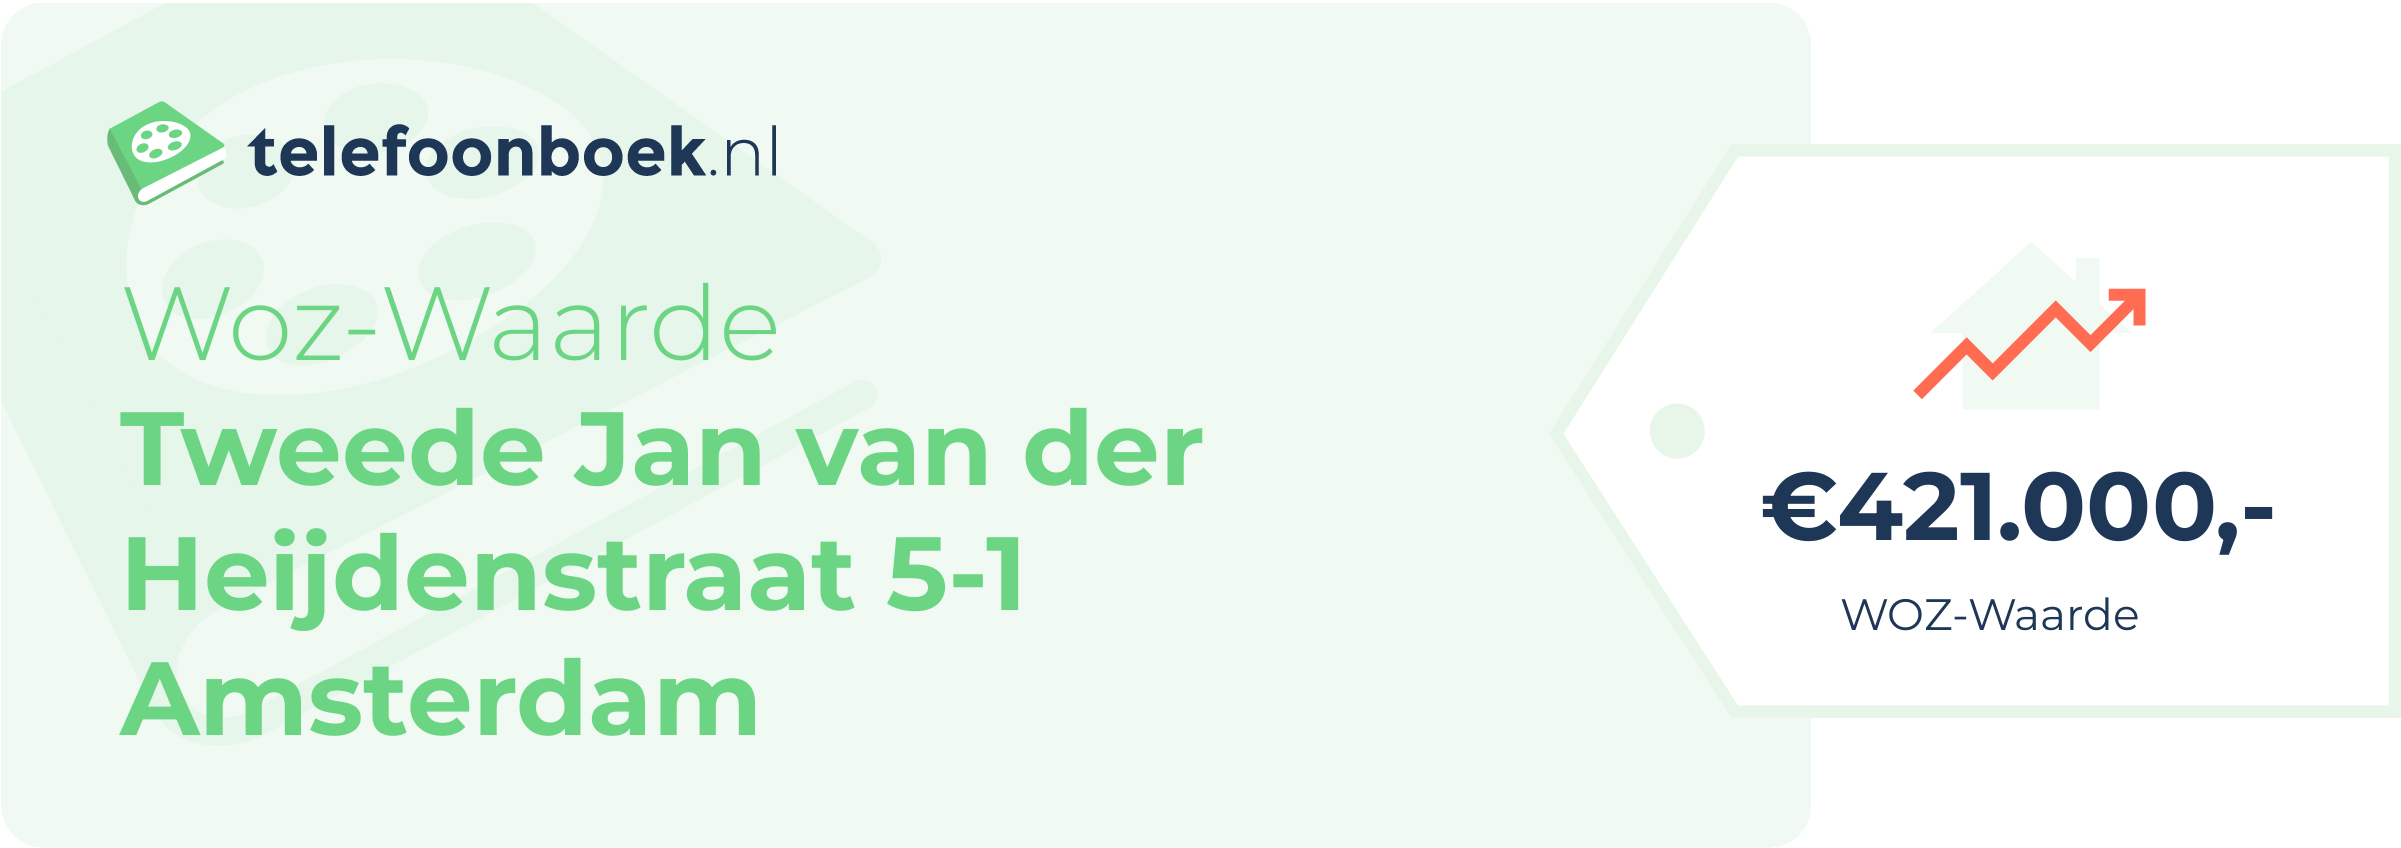 WOZ-waarde Tweede Jan Van Der Heijdenstraat 5-1 Amsterdam